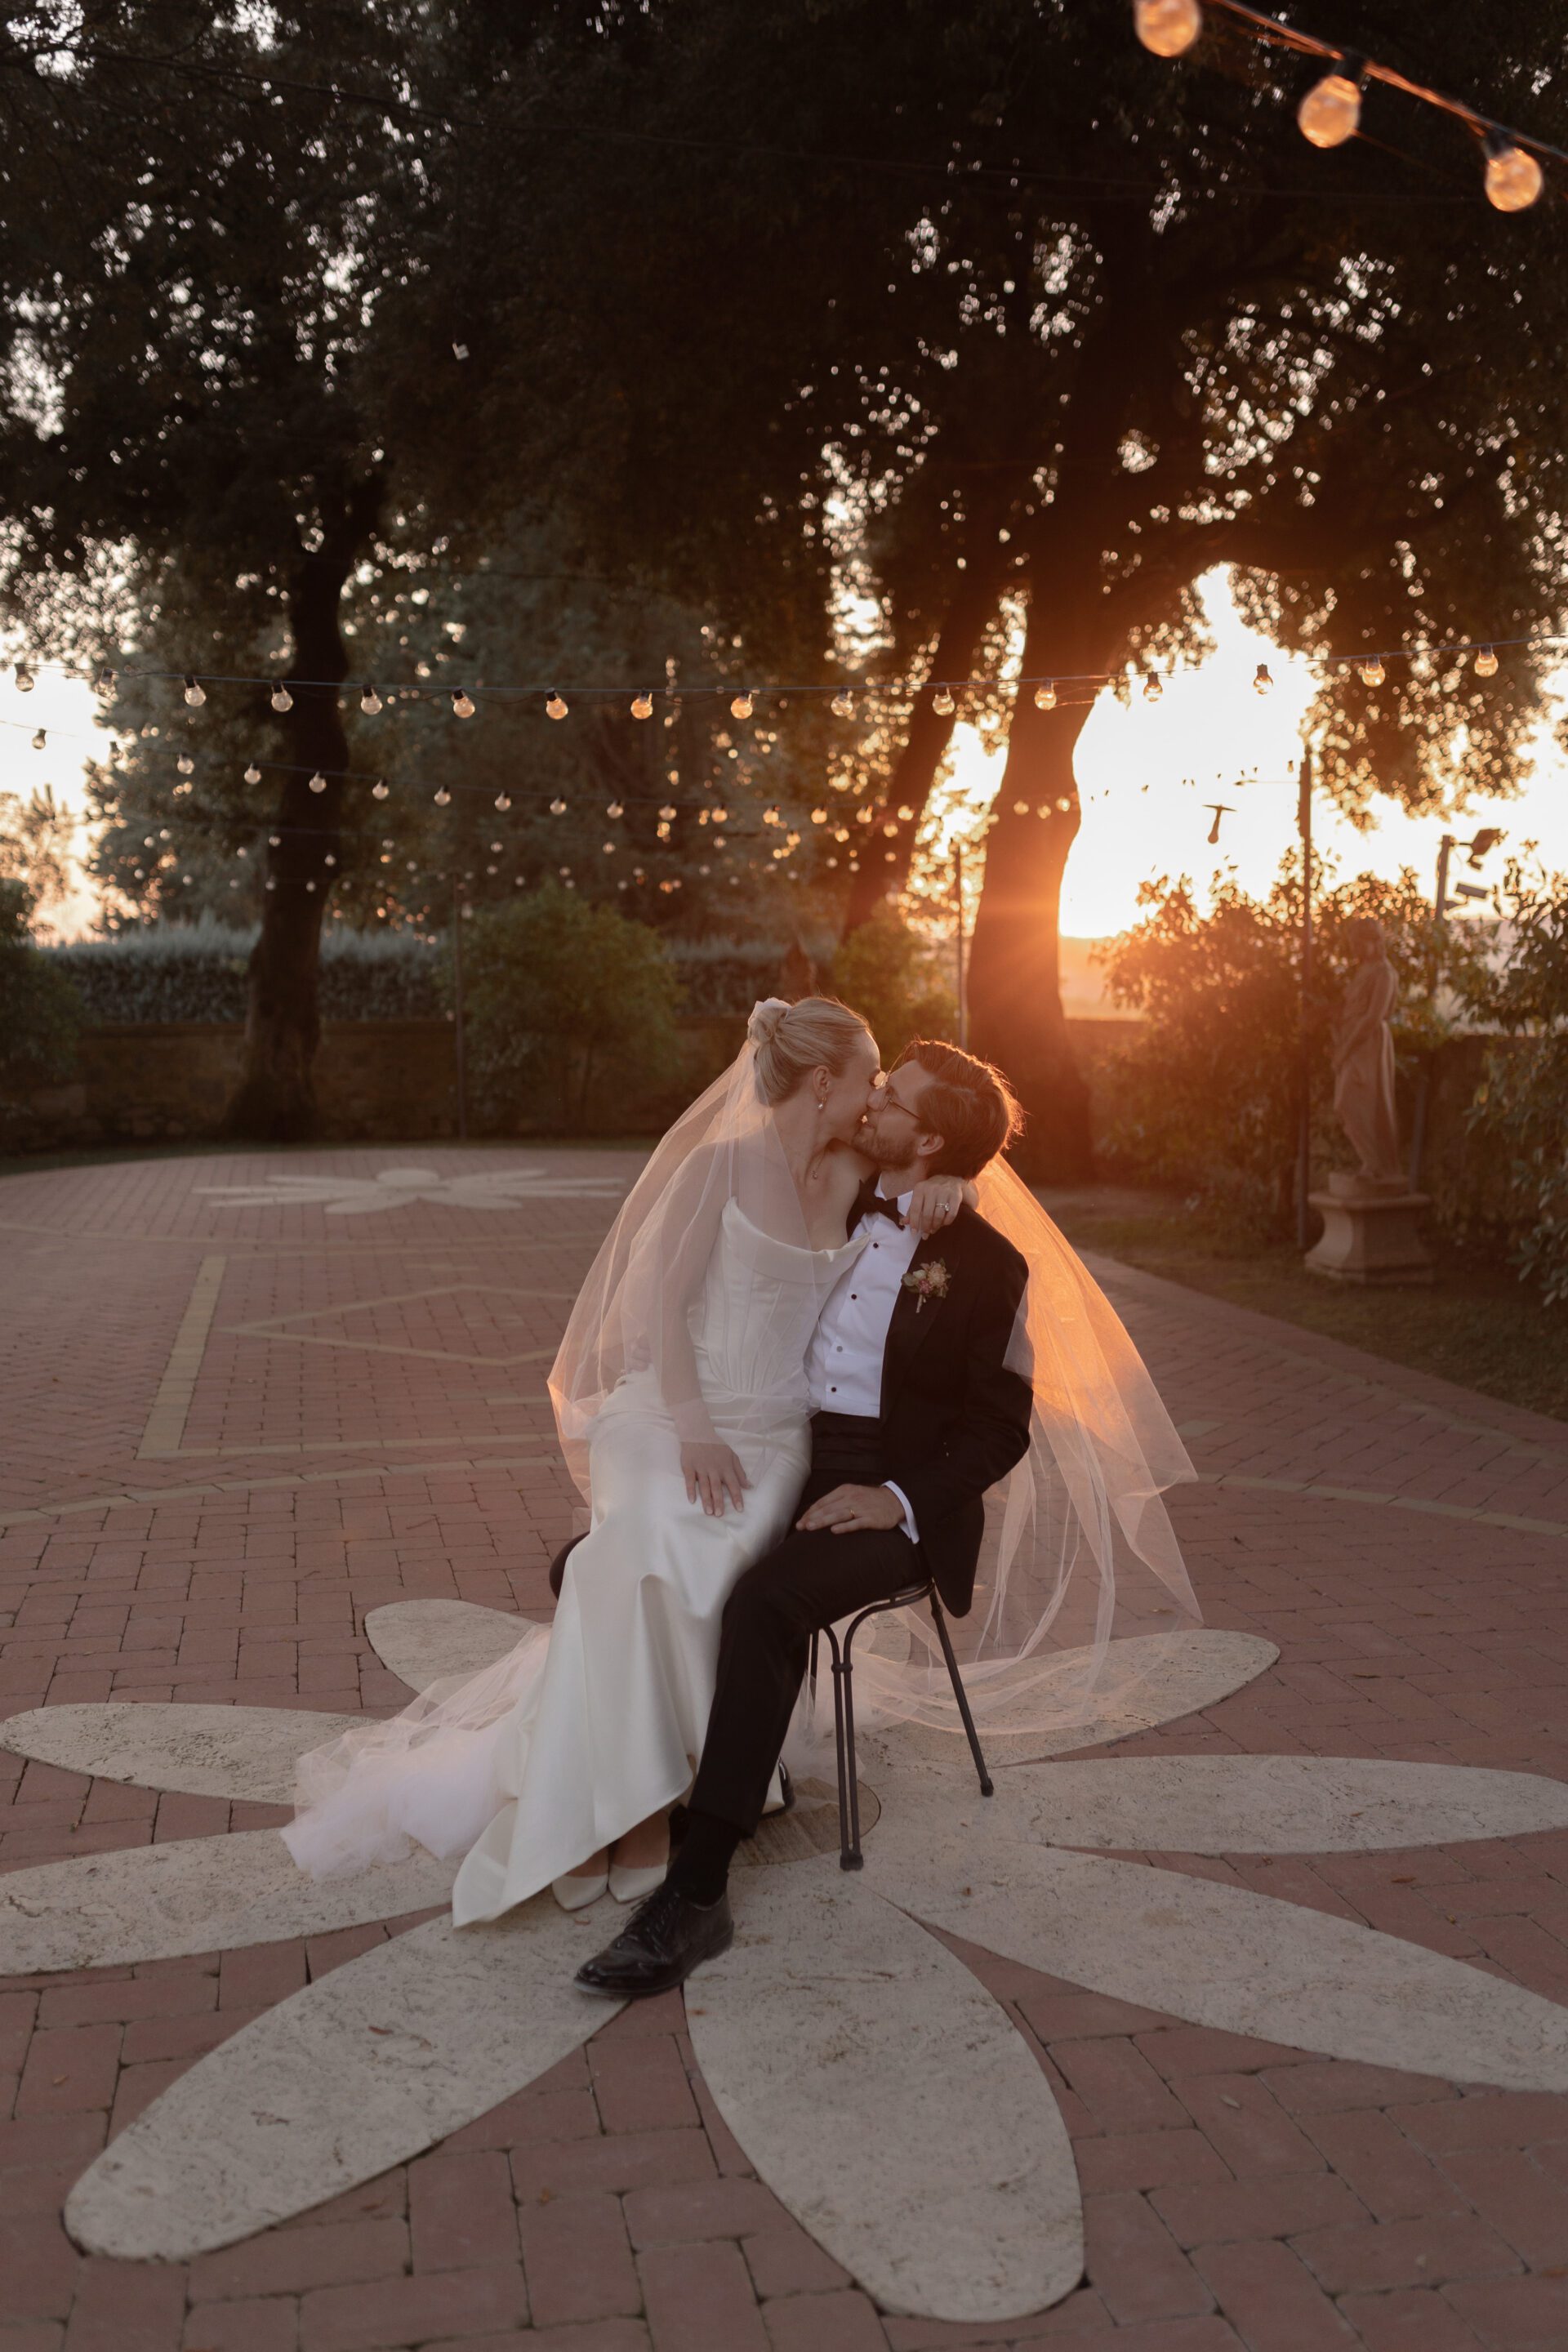 Italian wedding photography captures golden hour couple portrait session at luxury Tuscan wedding